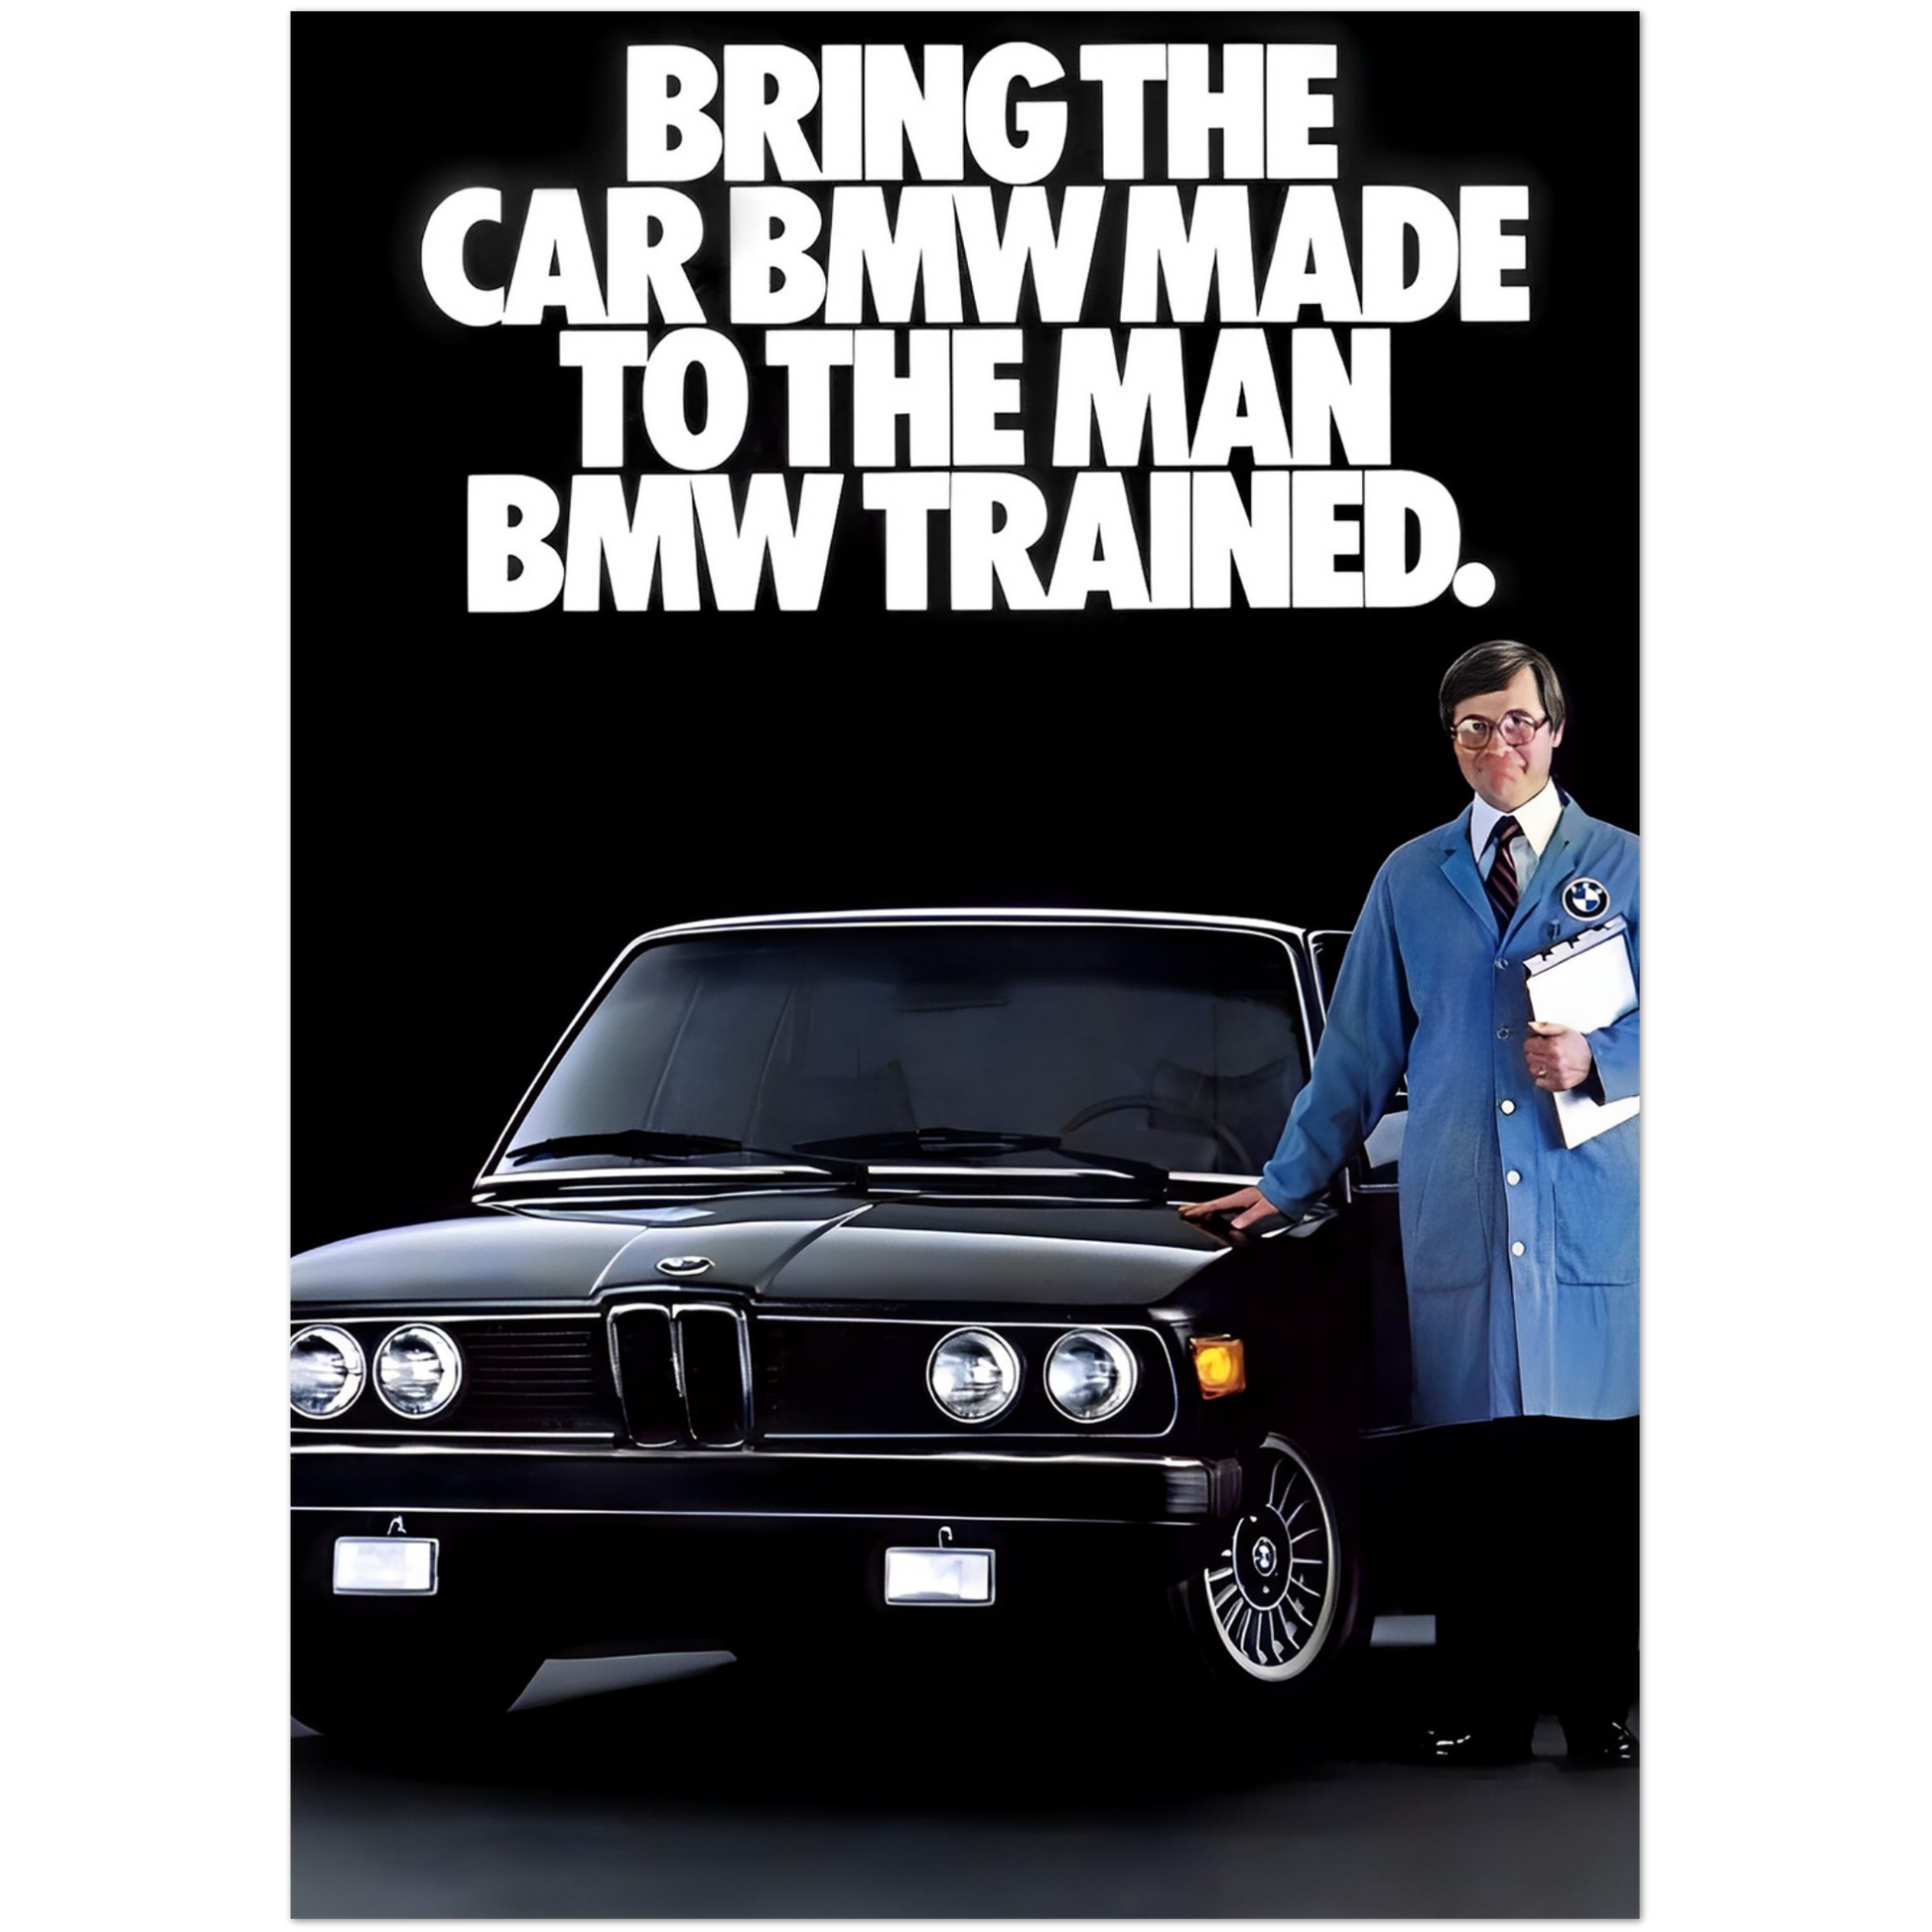 BMW 5 Series E12 ad poster